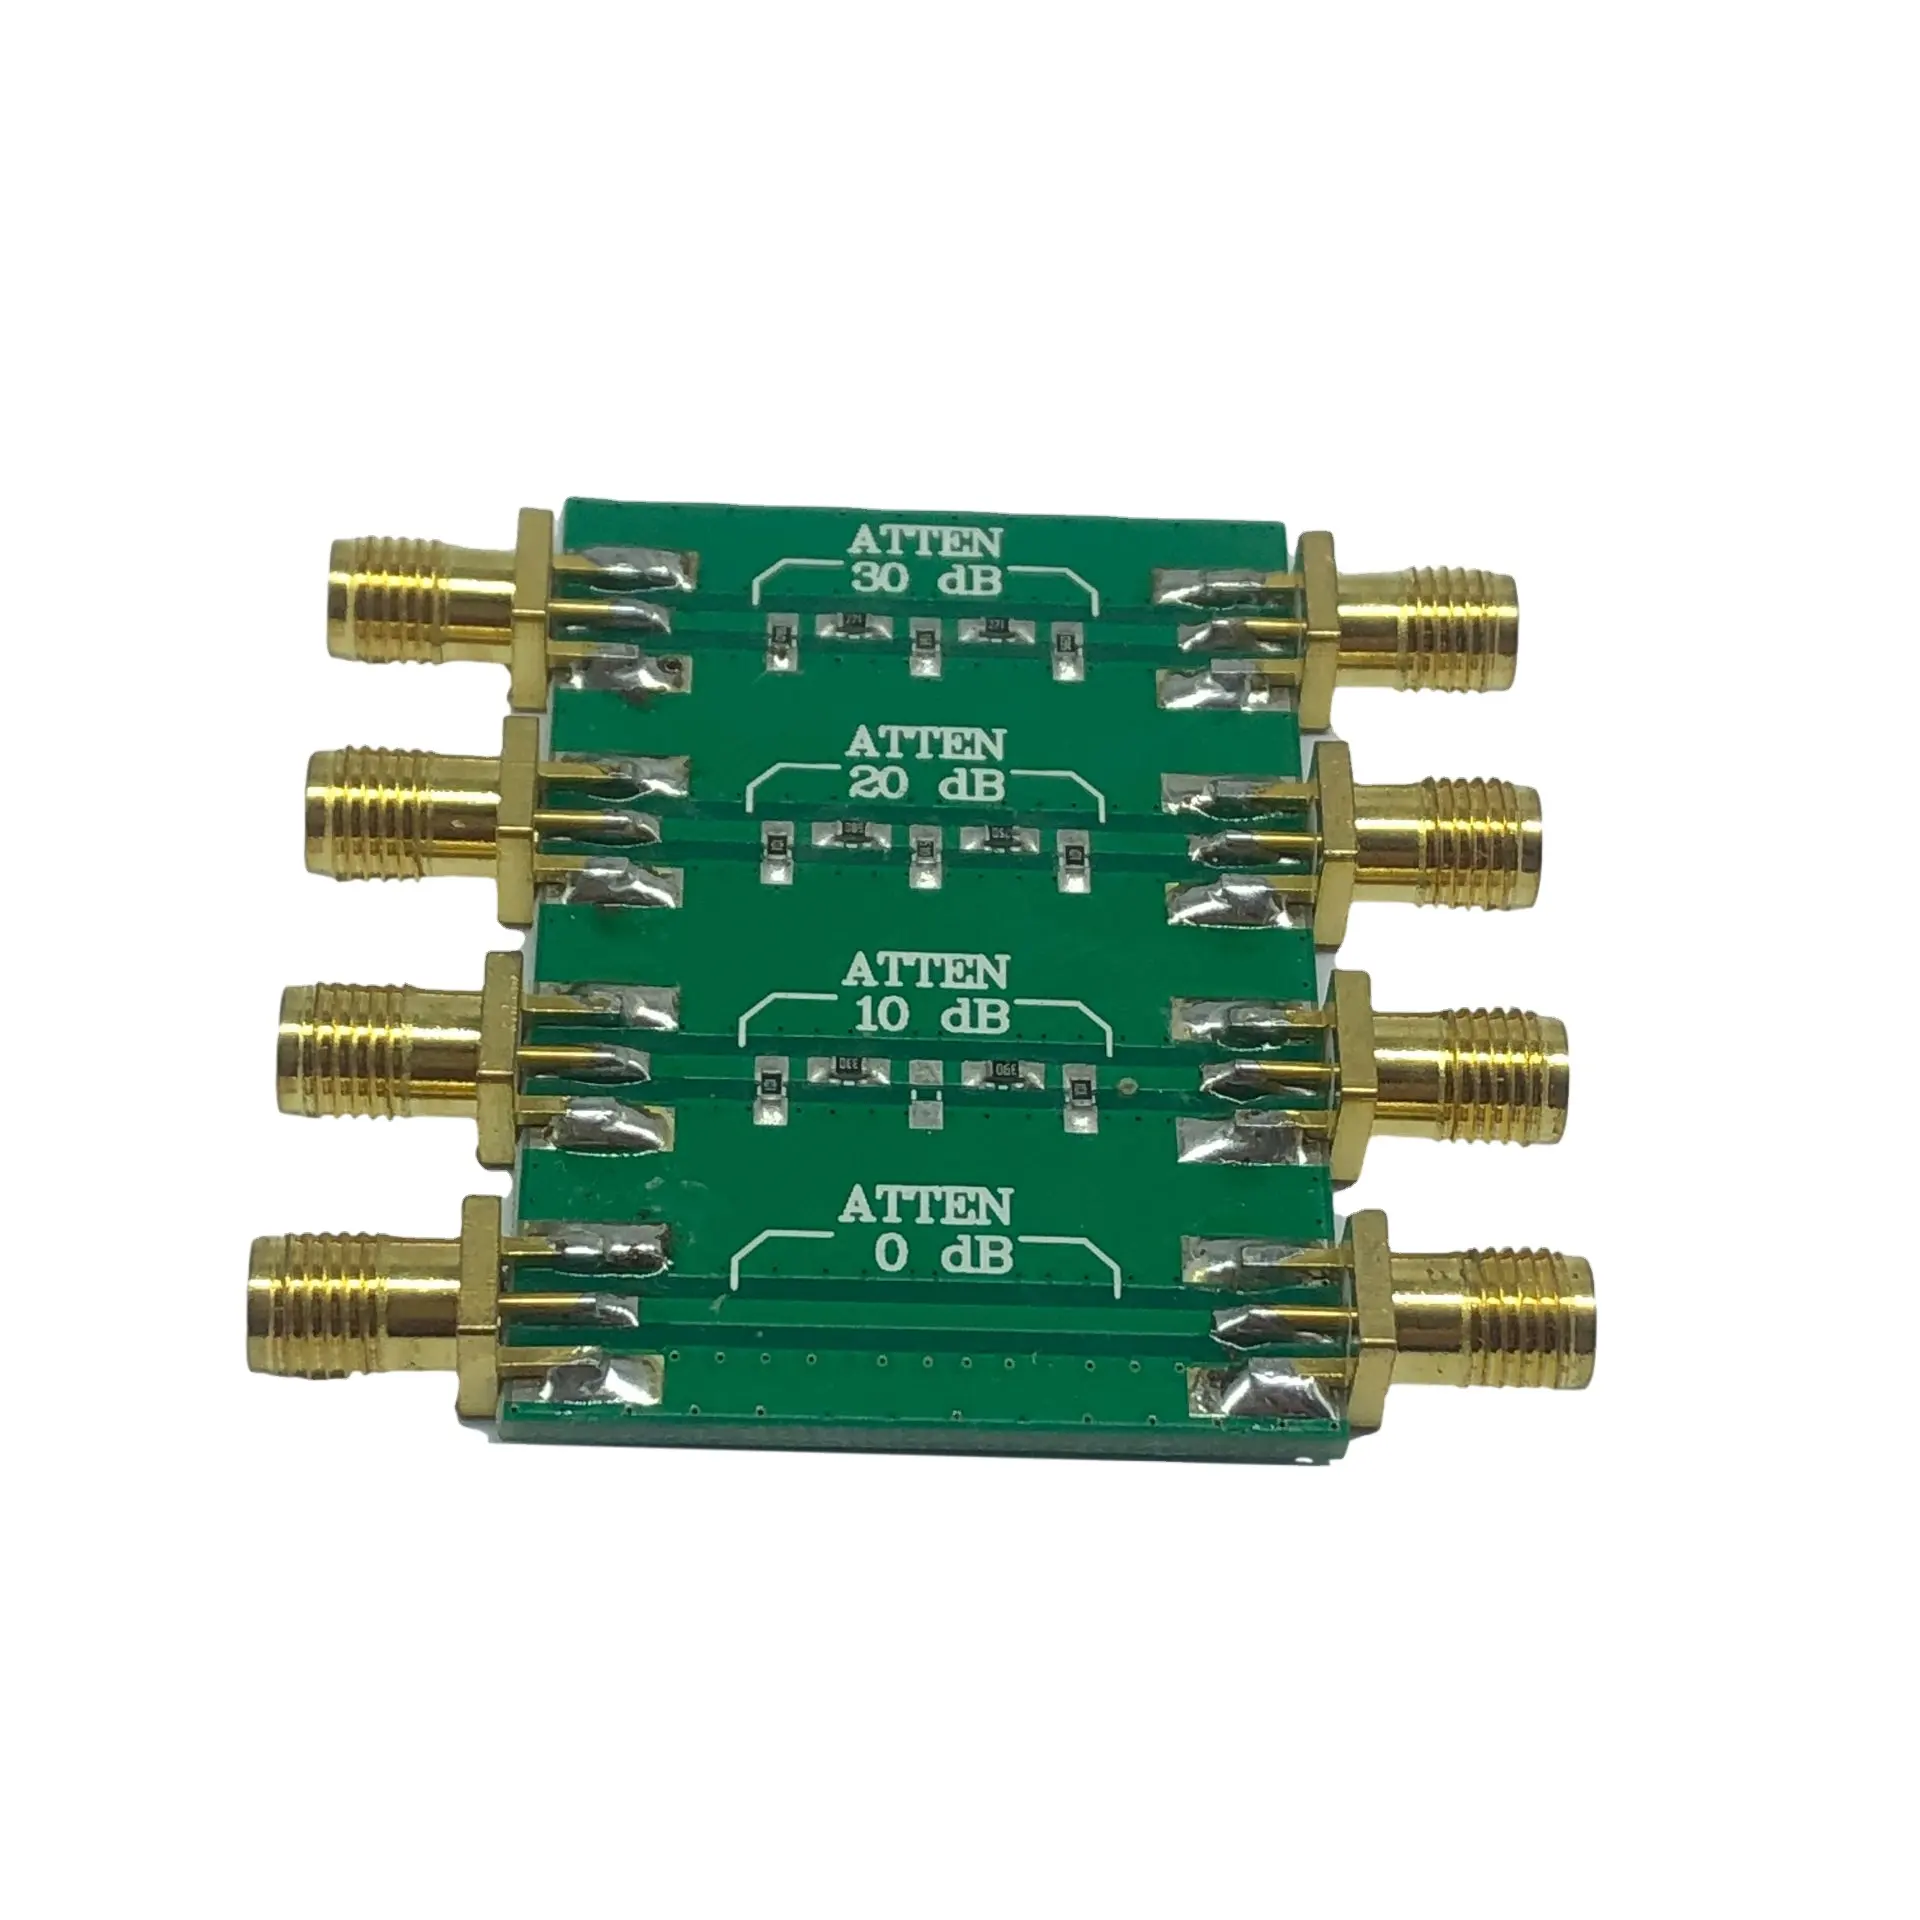 Atenuador fijo RF de 200mW DC 4,0 GHz, doble cabeza hembra, 0dB, 10dB, 20dB, 30dB, conector, accesorios eléctricos